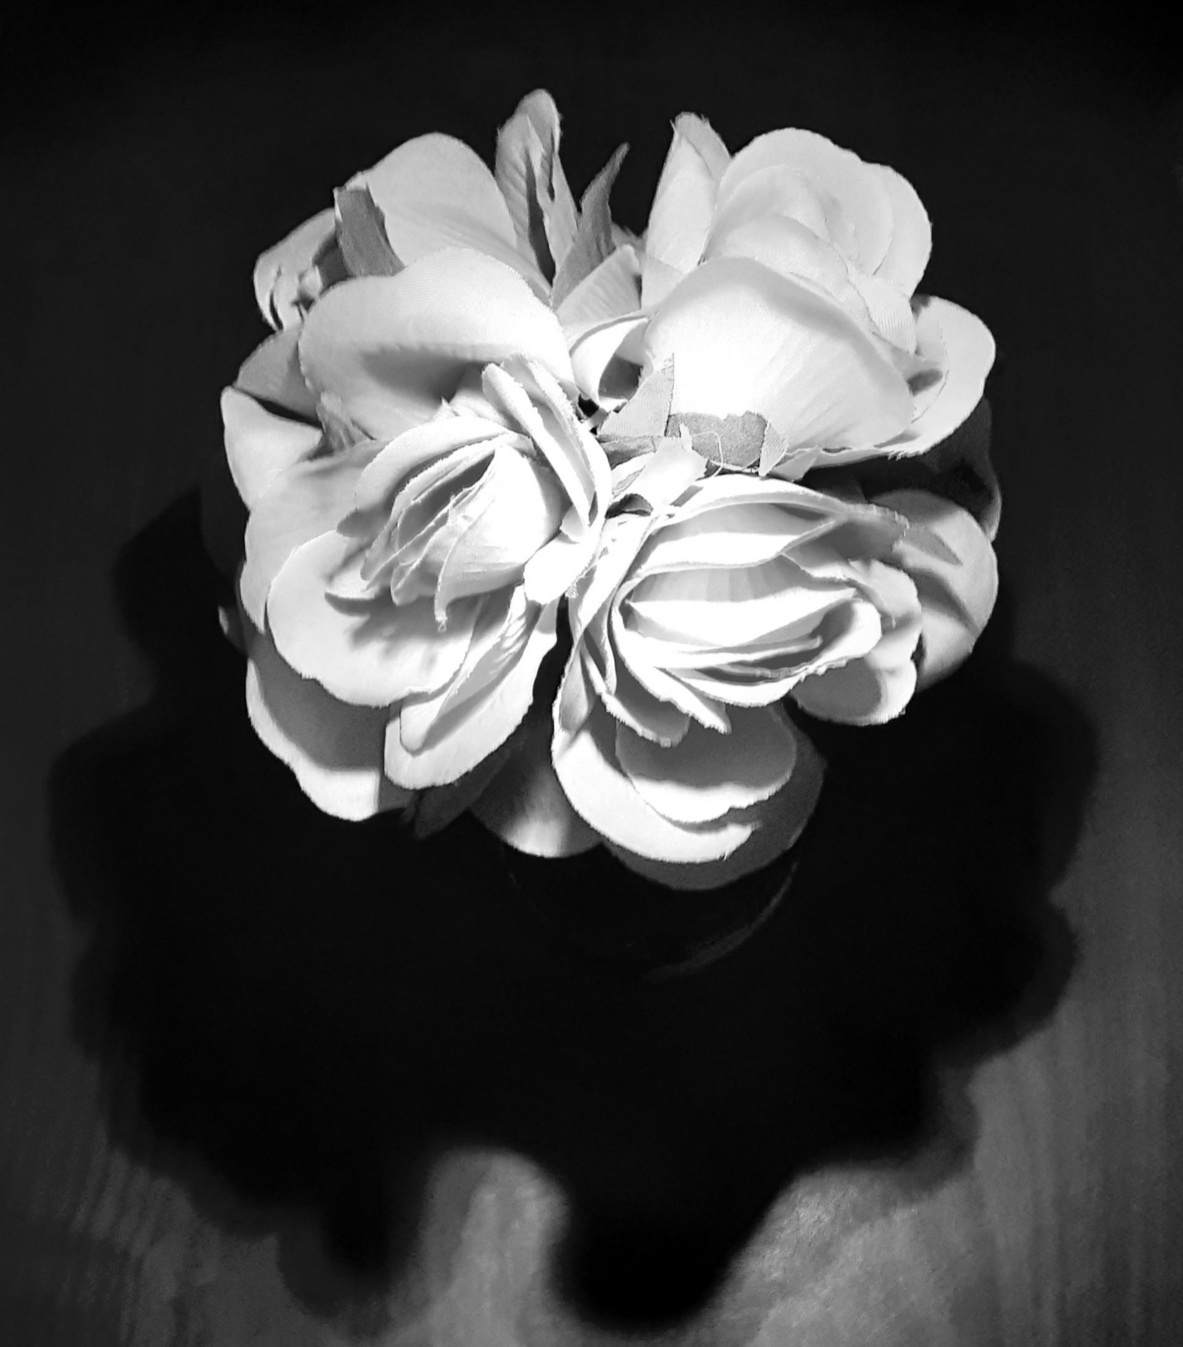 I call it the fleur dune nuit noire et blanche by ReinaRose89 on DeviantArt